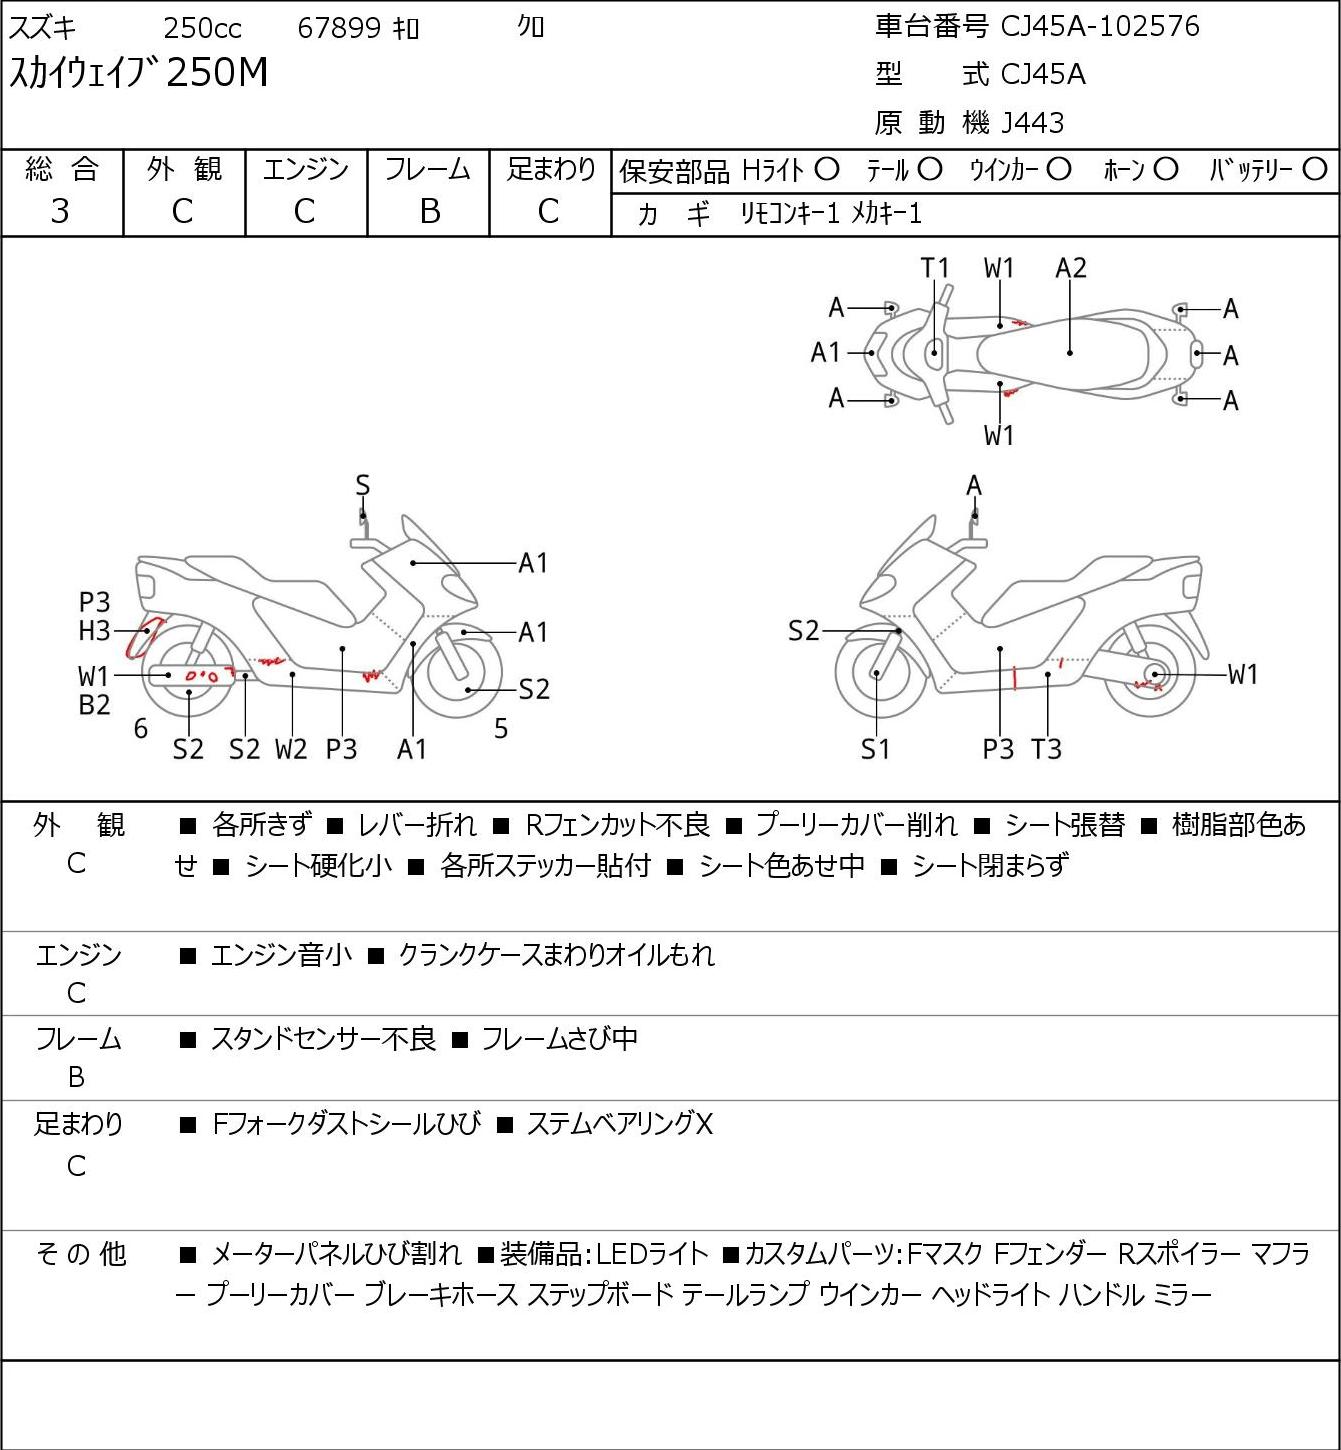 Suzuki SKYWAVE 250M CJ45A 2007г. 67899